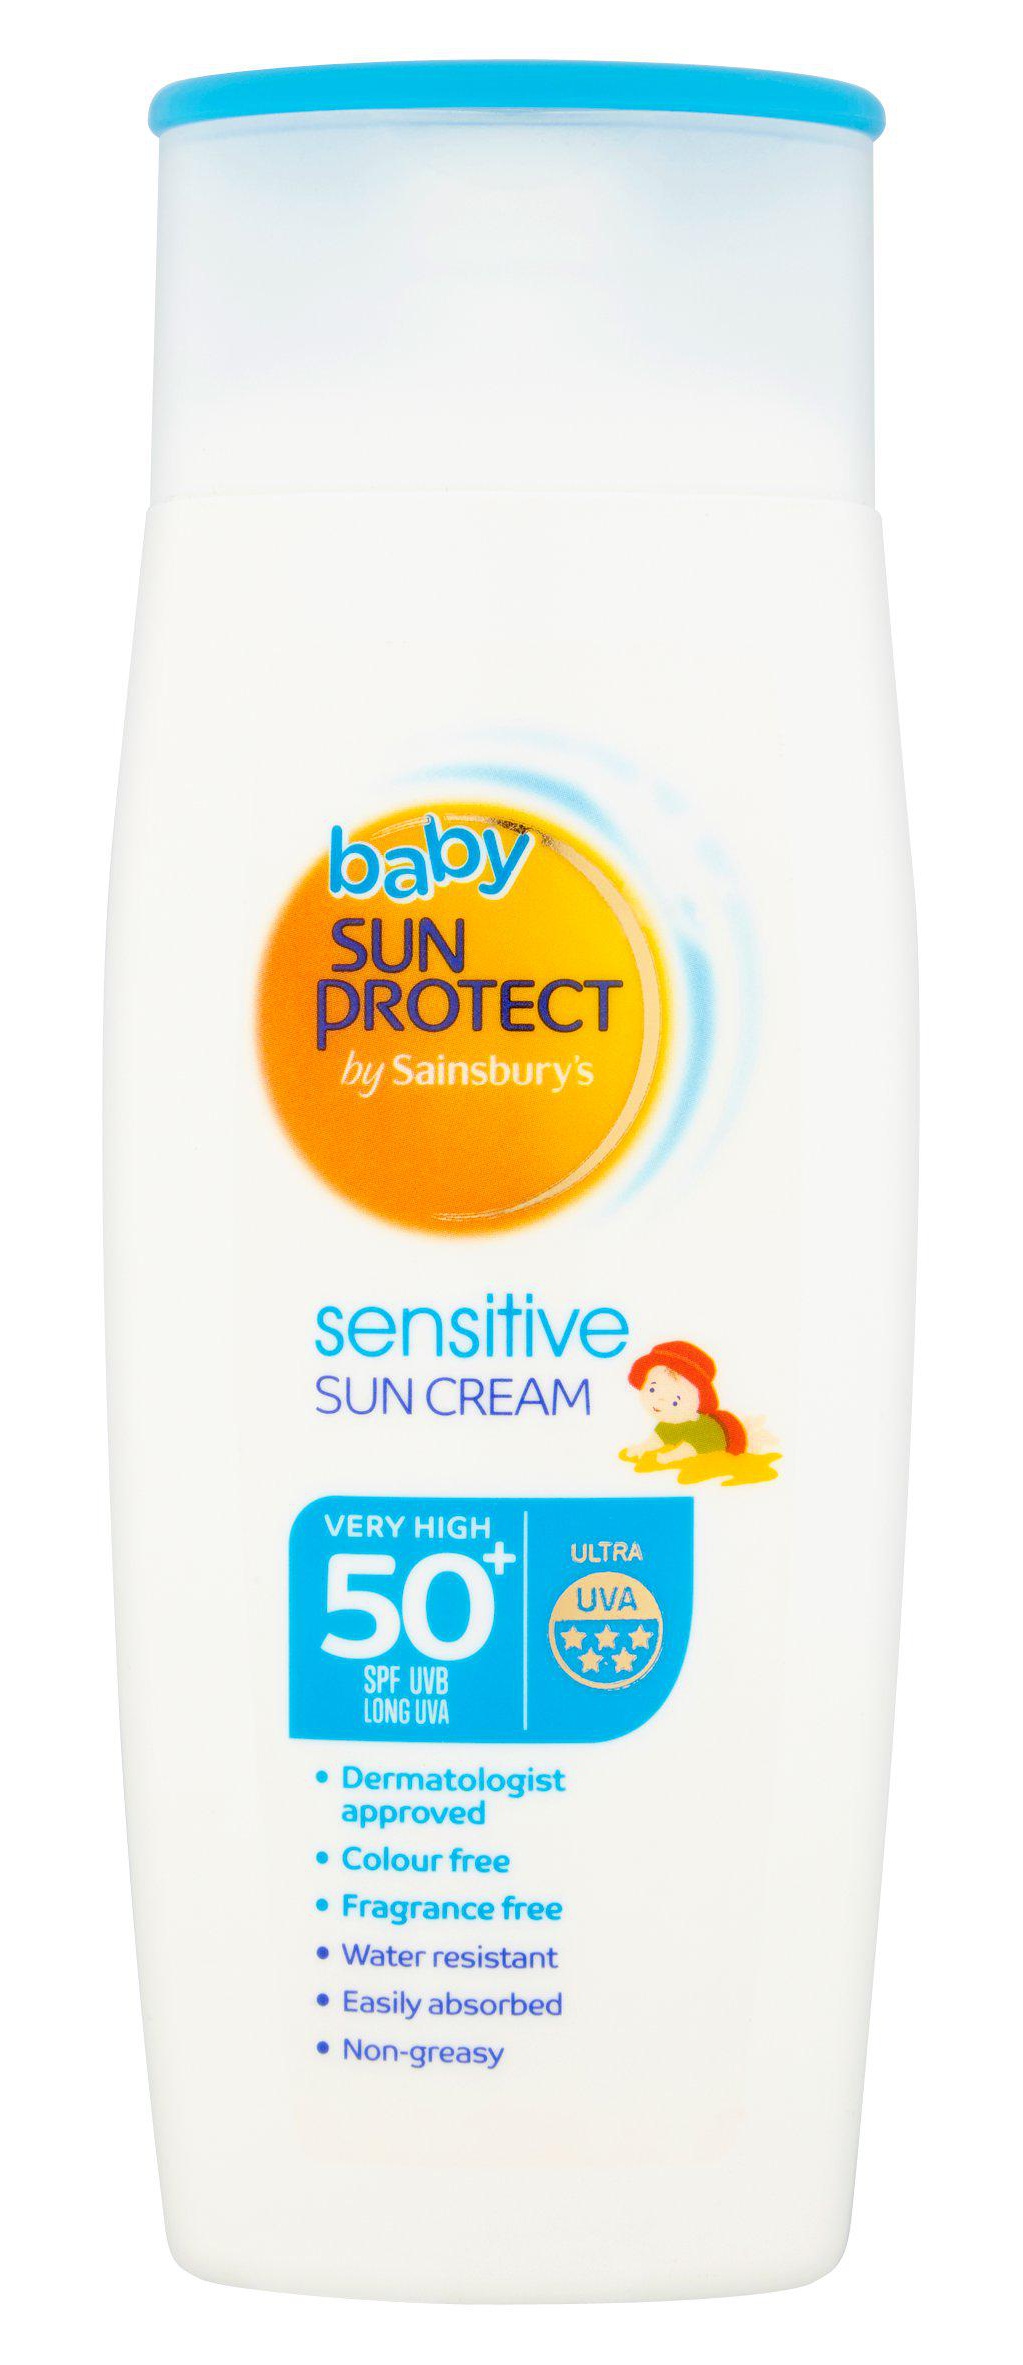 Sainsbury's Baby Sun Protect Lotion, Sensitive Spf50+ 5 Stars Uva